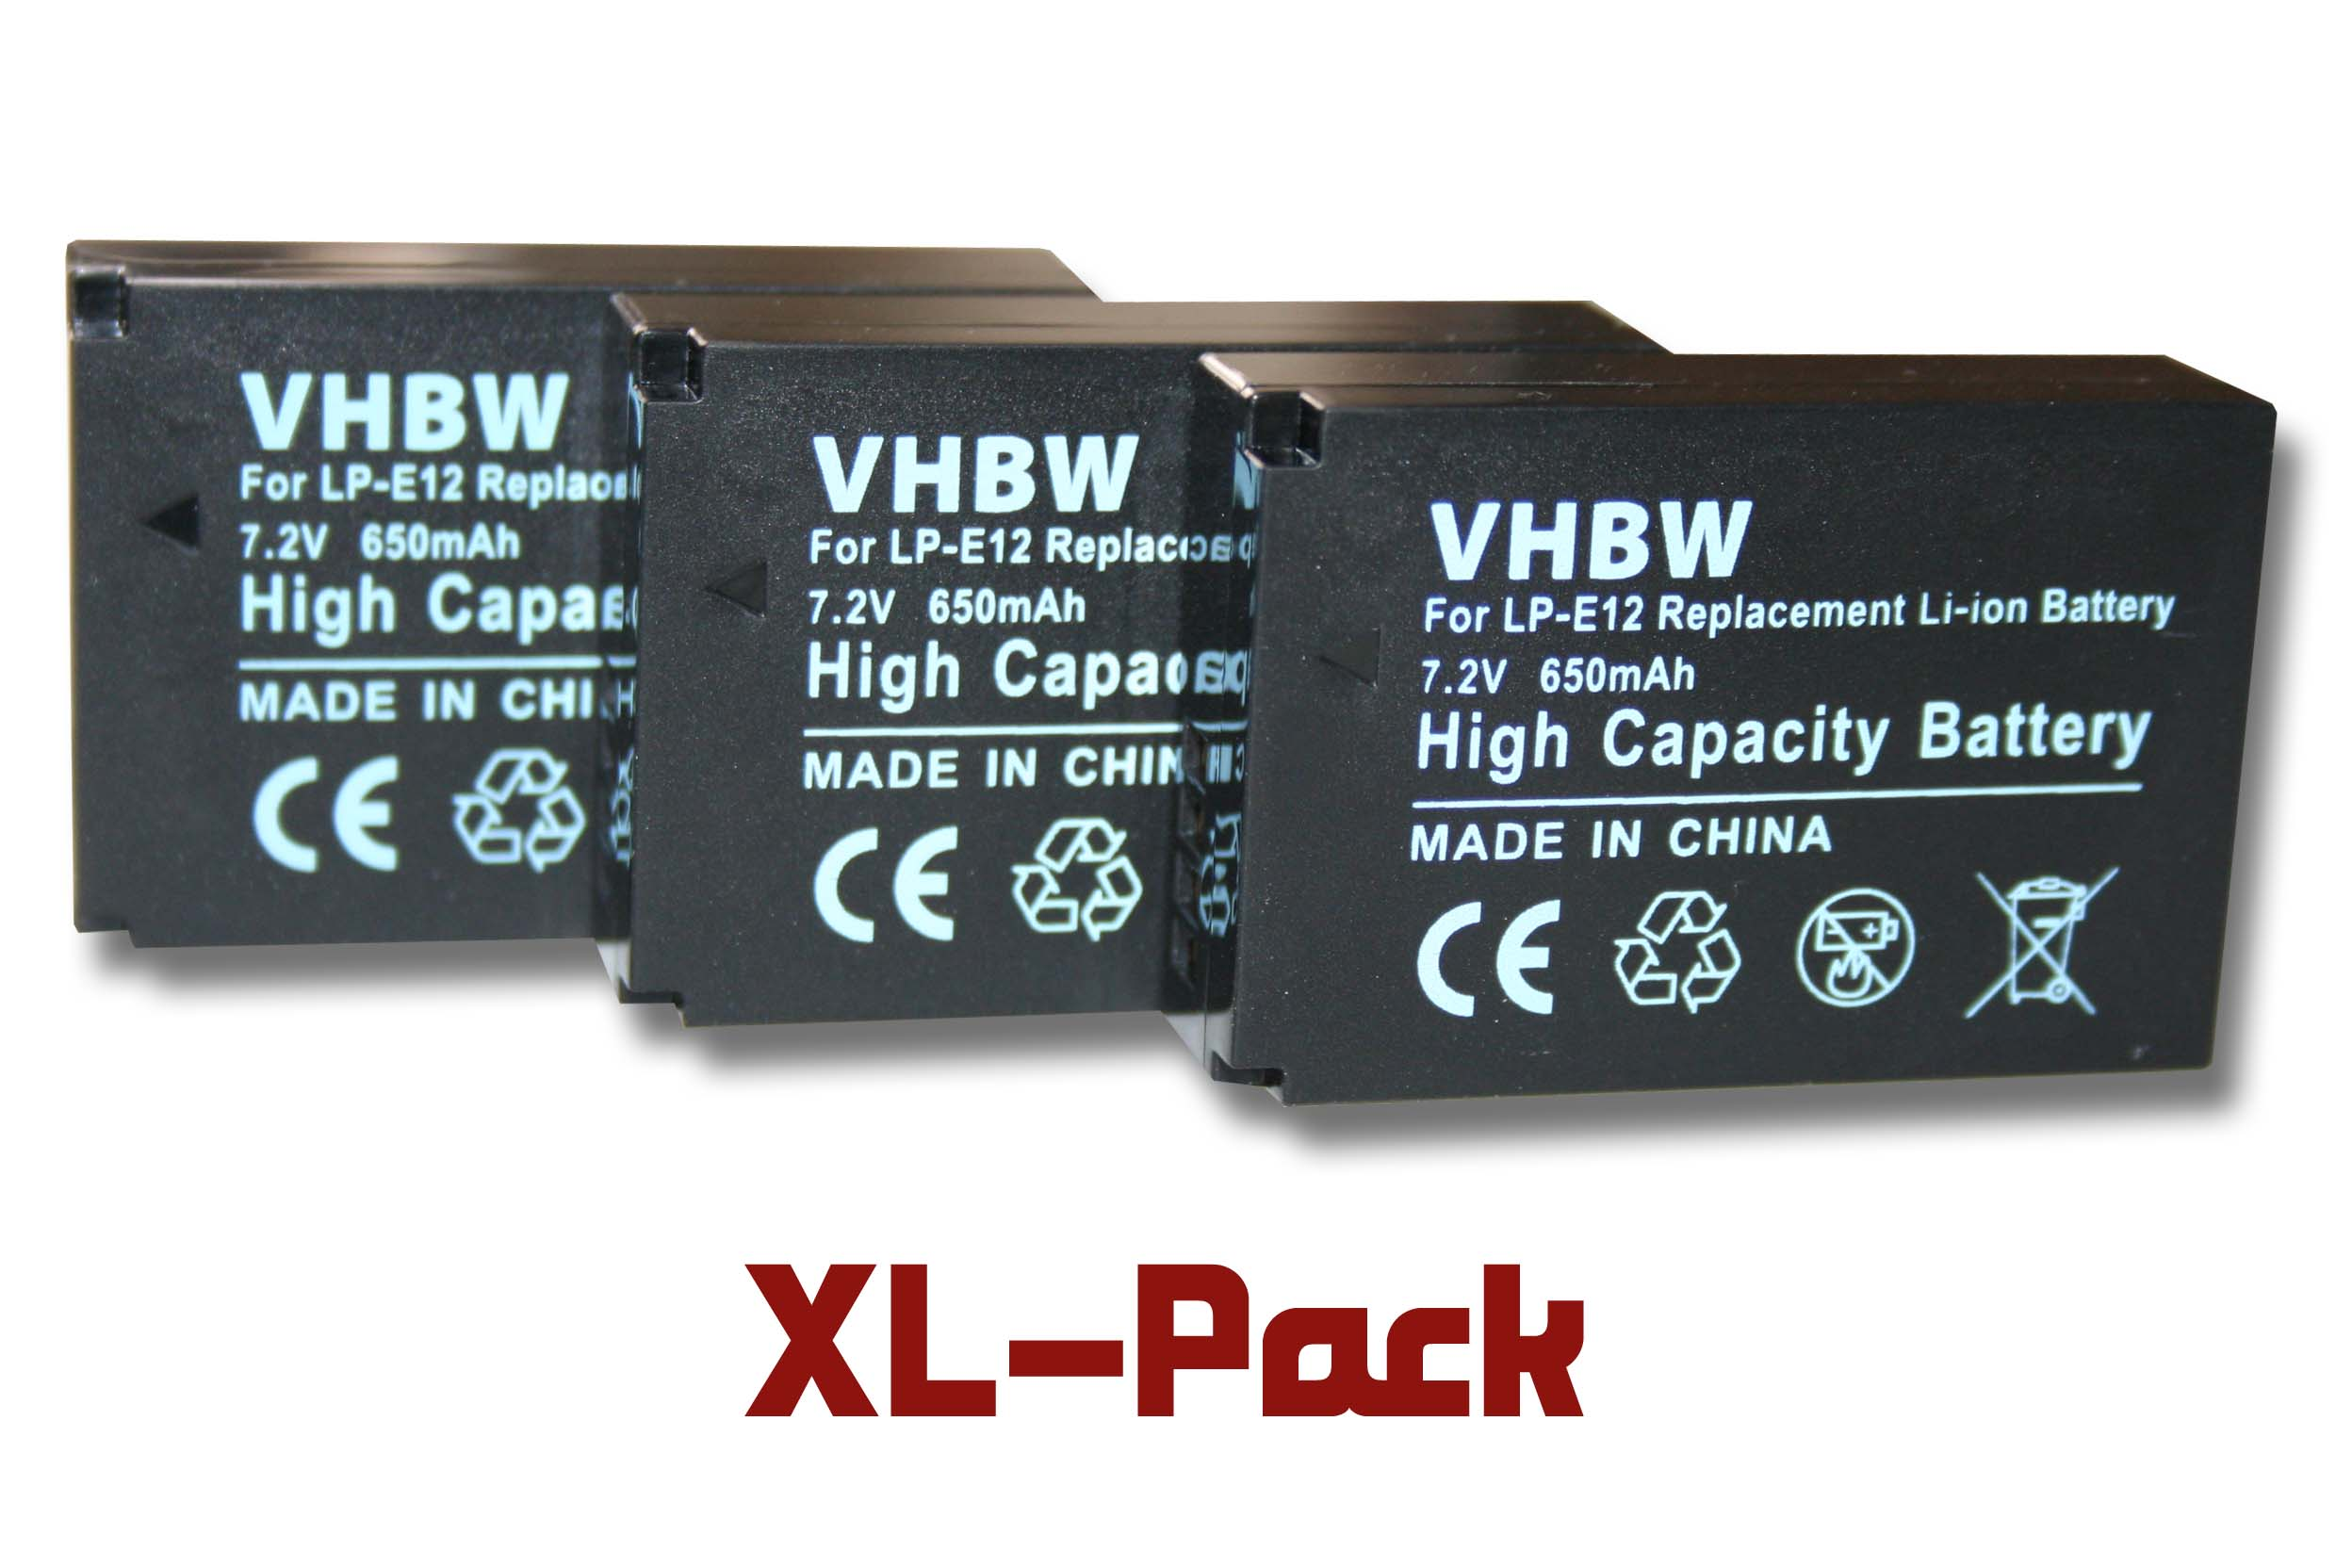 für VHBW Li-Ion 650 Volt, Canon Akku, LP-E12 mAh 7.2 Ersatz für